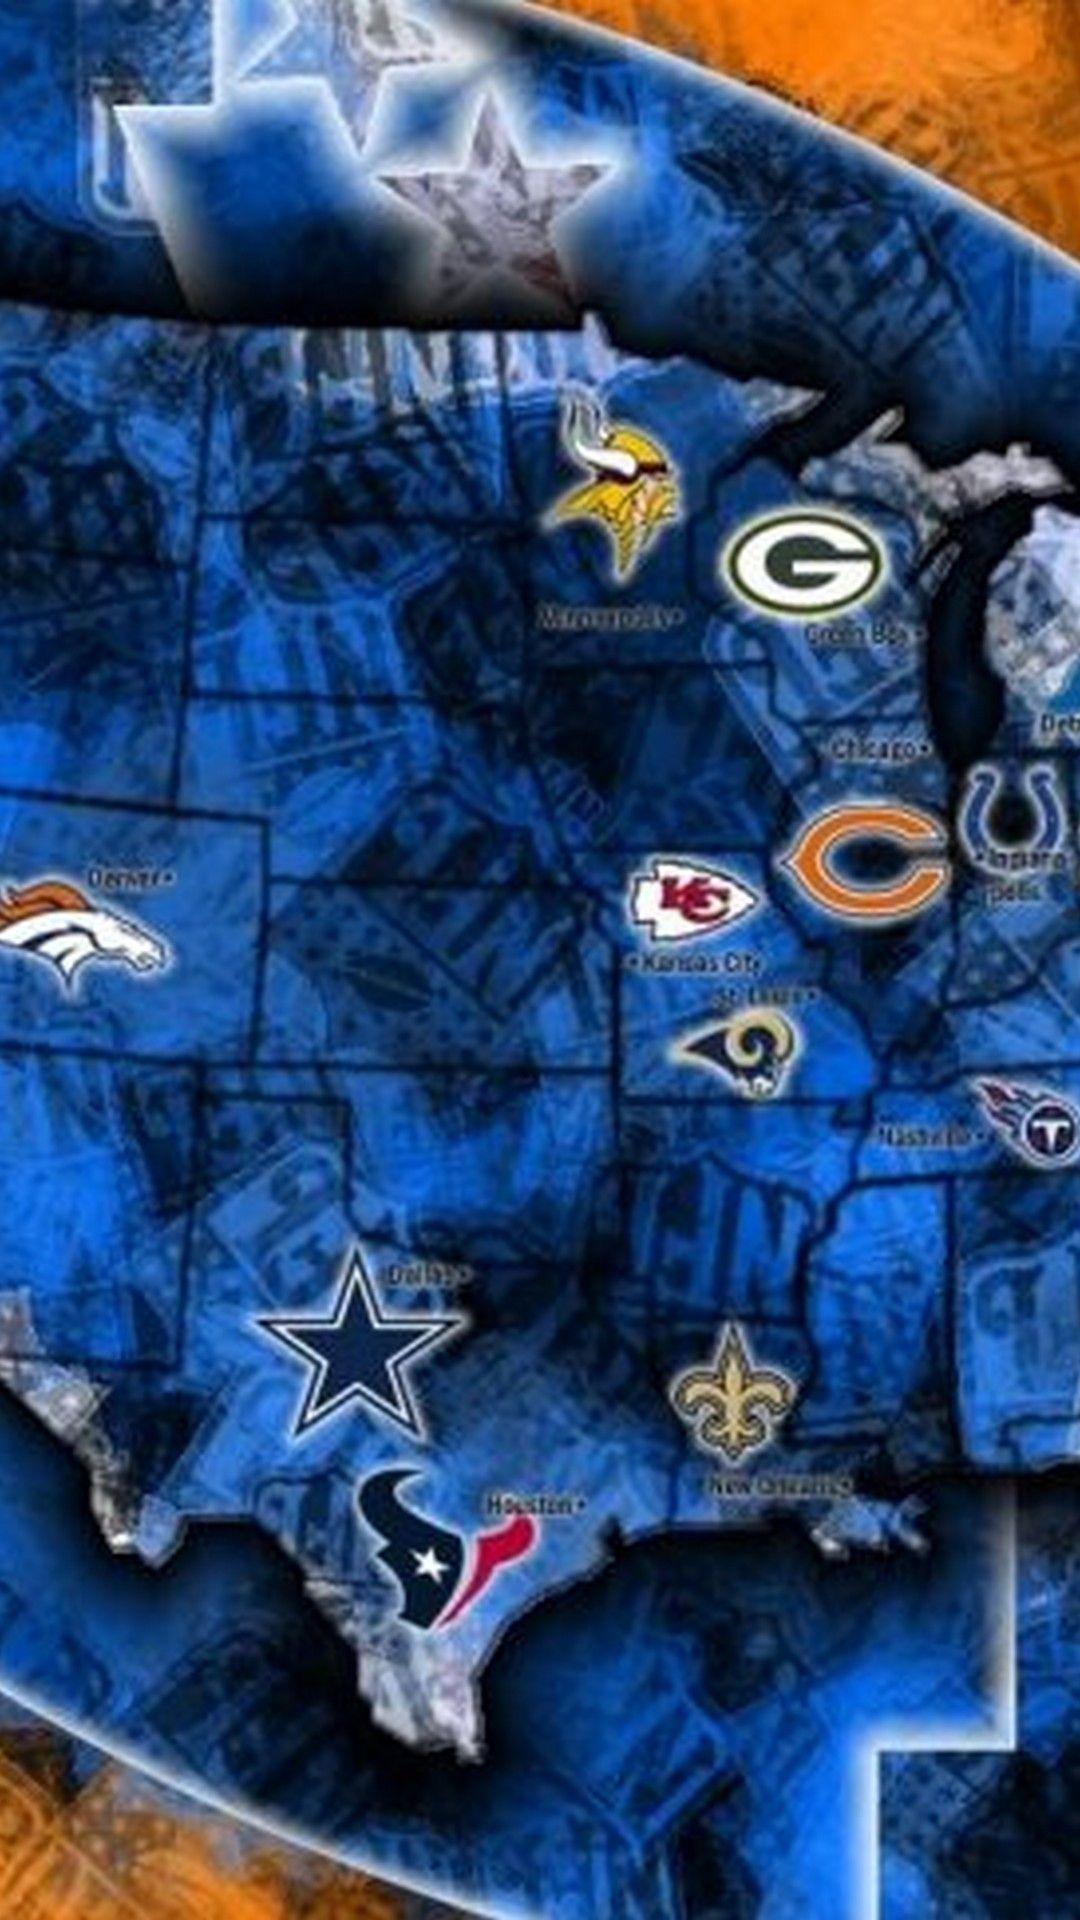 Cool NFL iPhone 7 Plus Wallpaper. iPhone 7 plus wallpaper